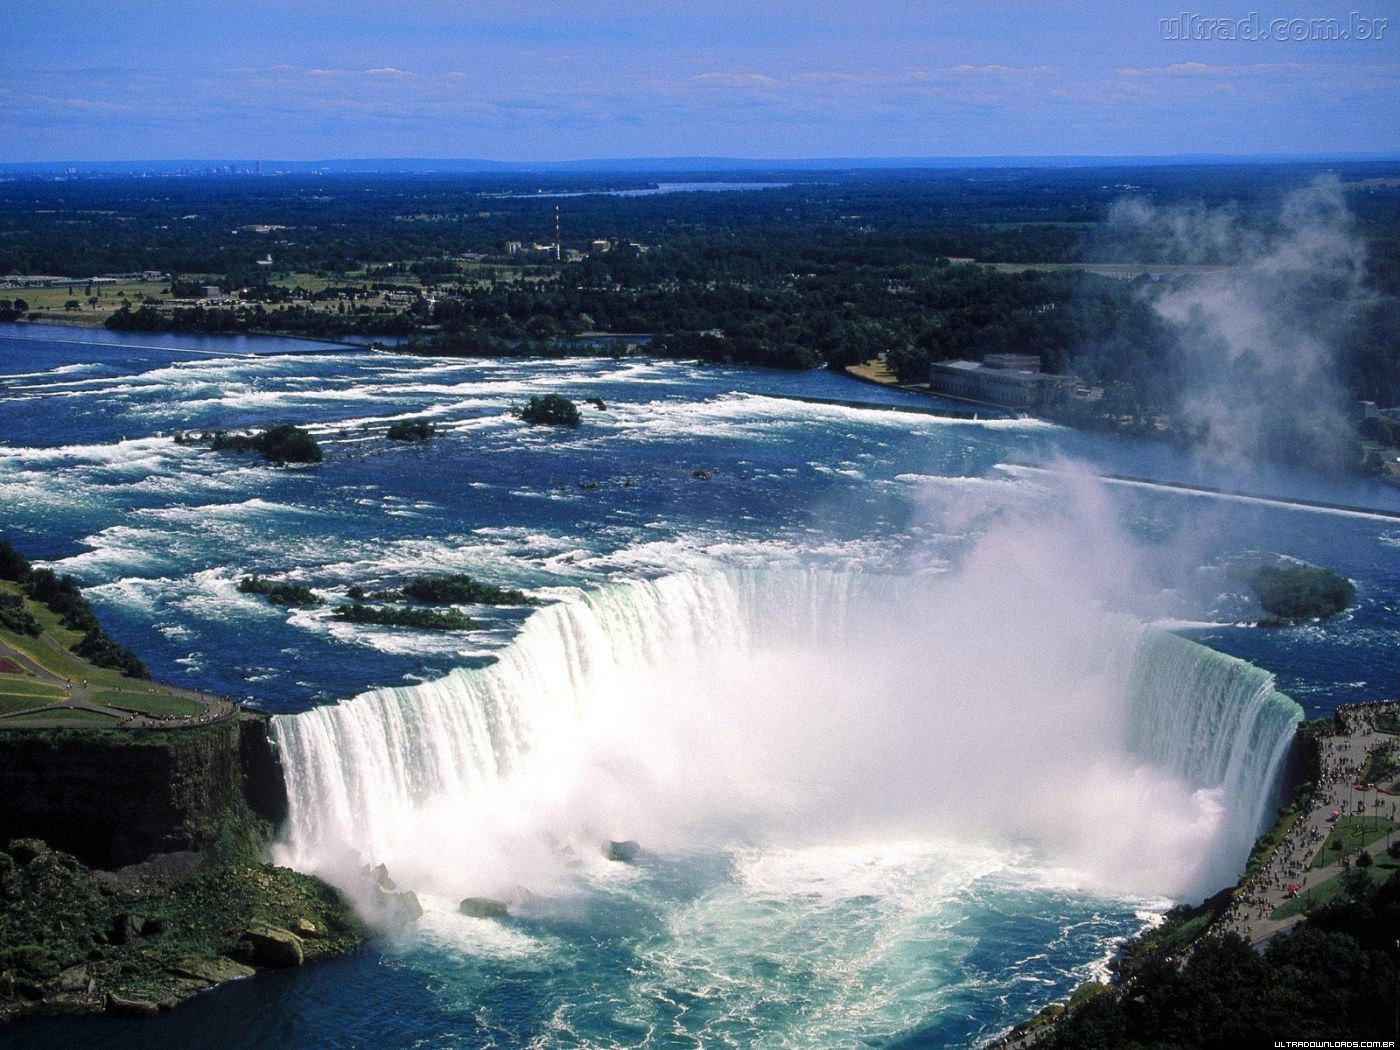 https://blogger.googleusercontent.com/img/b/R29vZ2xl/AVvXsEgmVSGMmHe8U77yLn8UIal-CASTGIGyaFqEUyyGhEPxUTp8zNu7WOnvIfOHdnOYvgiEsSkZDdwkcYgGcqmhhAdKqaWUEhUNqSWeozzwVL6msU4toScONao7TKUjlRFiiHz6mHqI3JlTP7-1/s1600/45849_Papel-de-Parede-Cachoeiras-do-Niagara-Visao-Aeria-em-Ontario-Canada_1400x1050.jpg